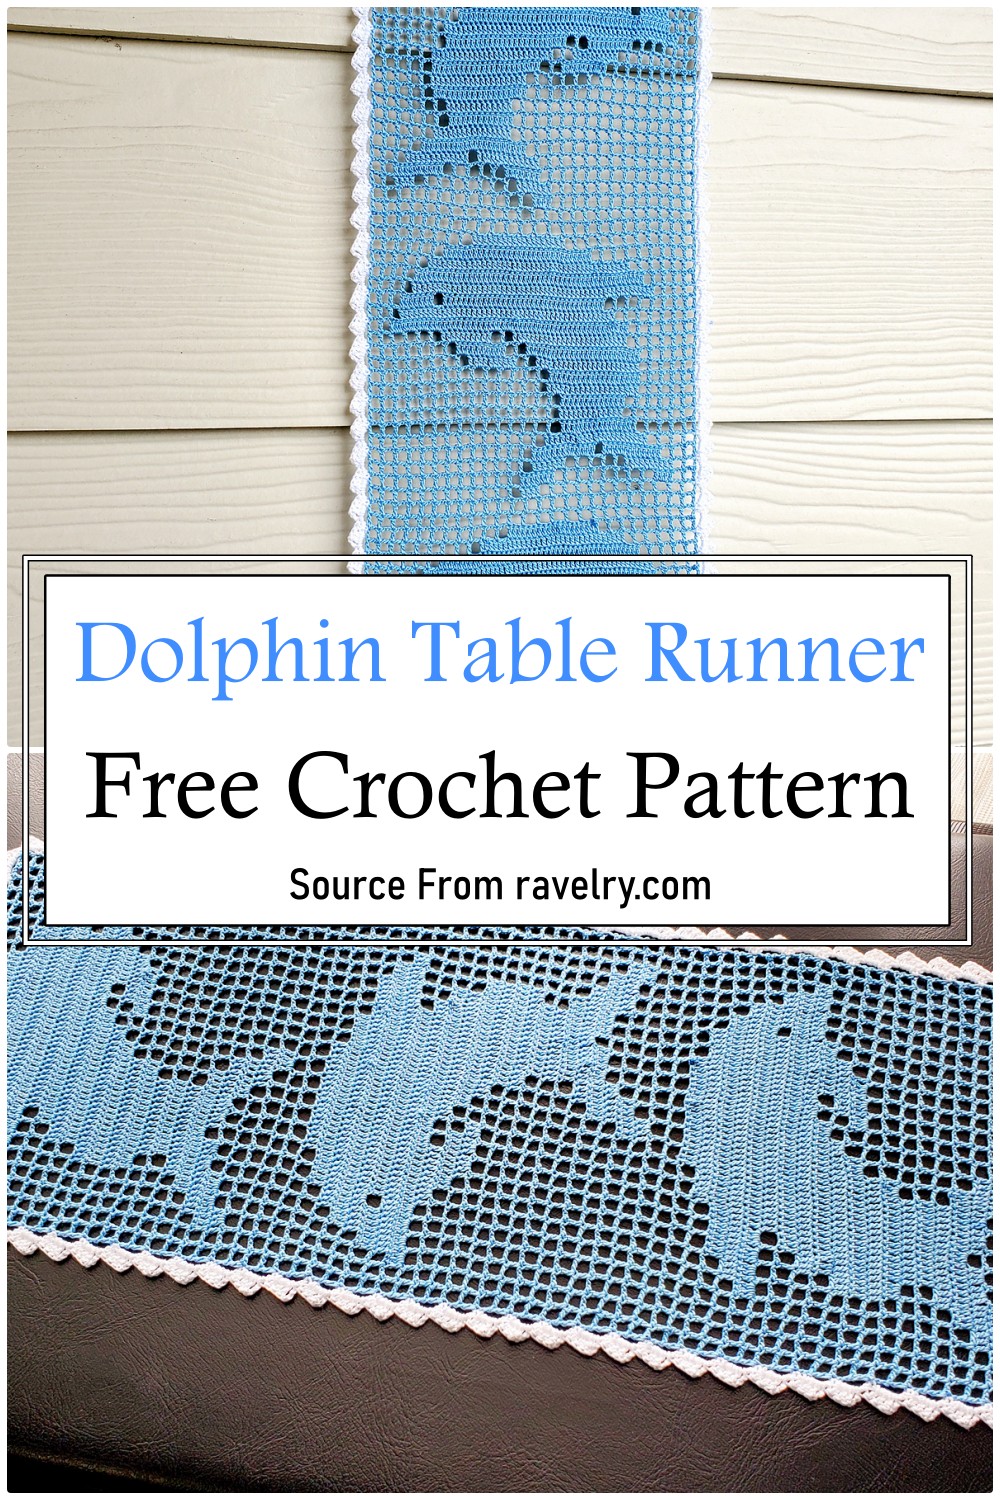 Dolphin Table Runner